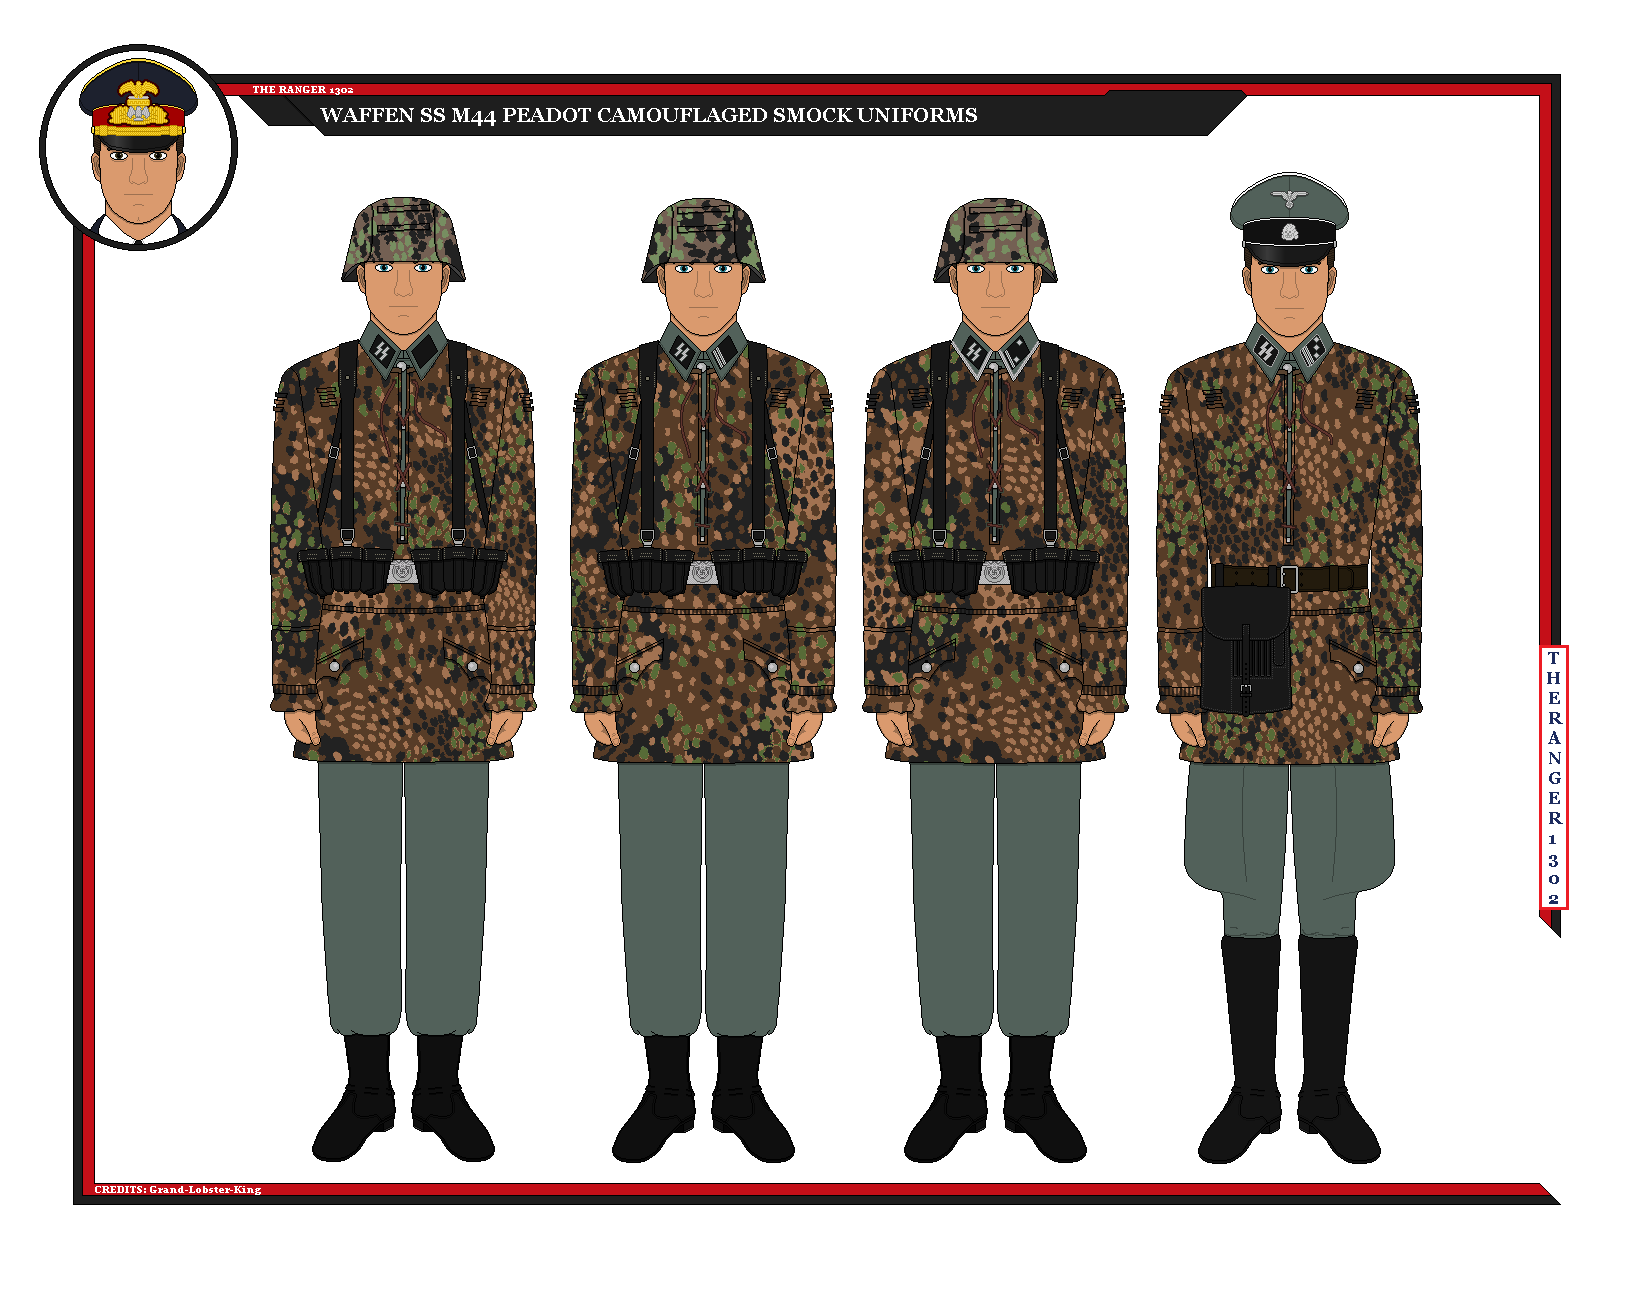 Waffen SS Camo Combat Uniforms by TheRanger1302 on DeviantArt